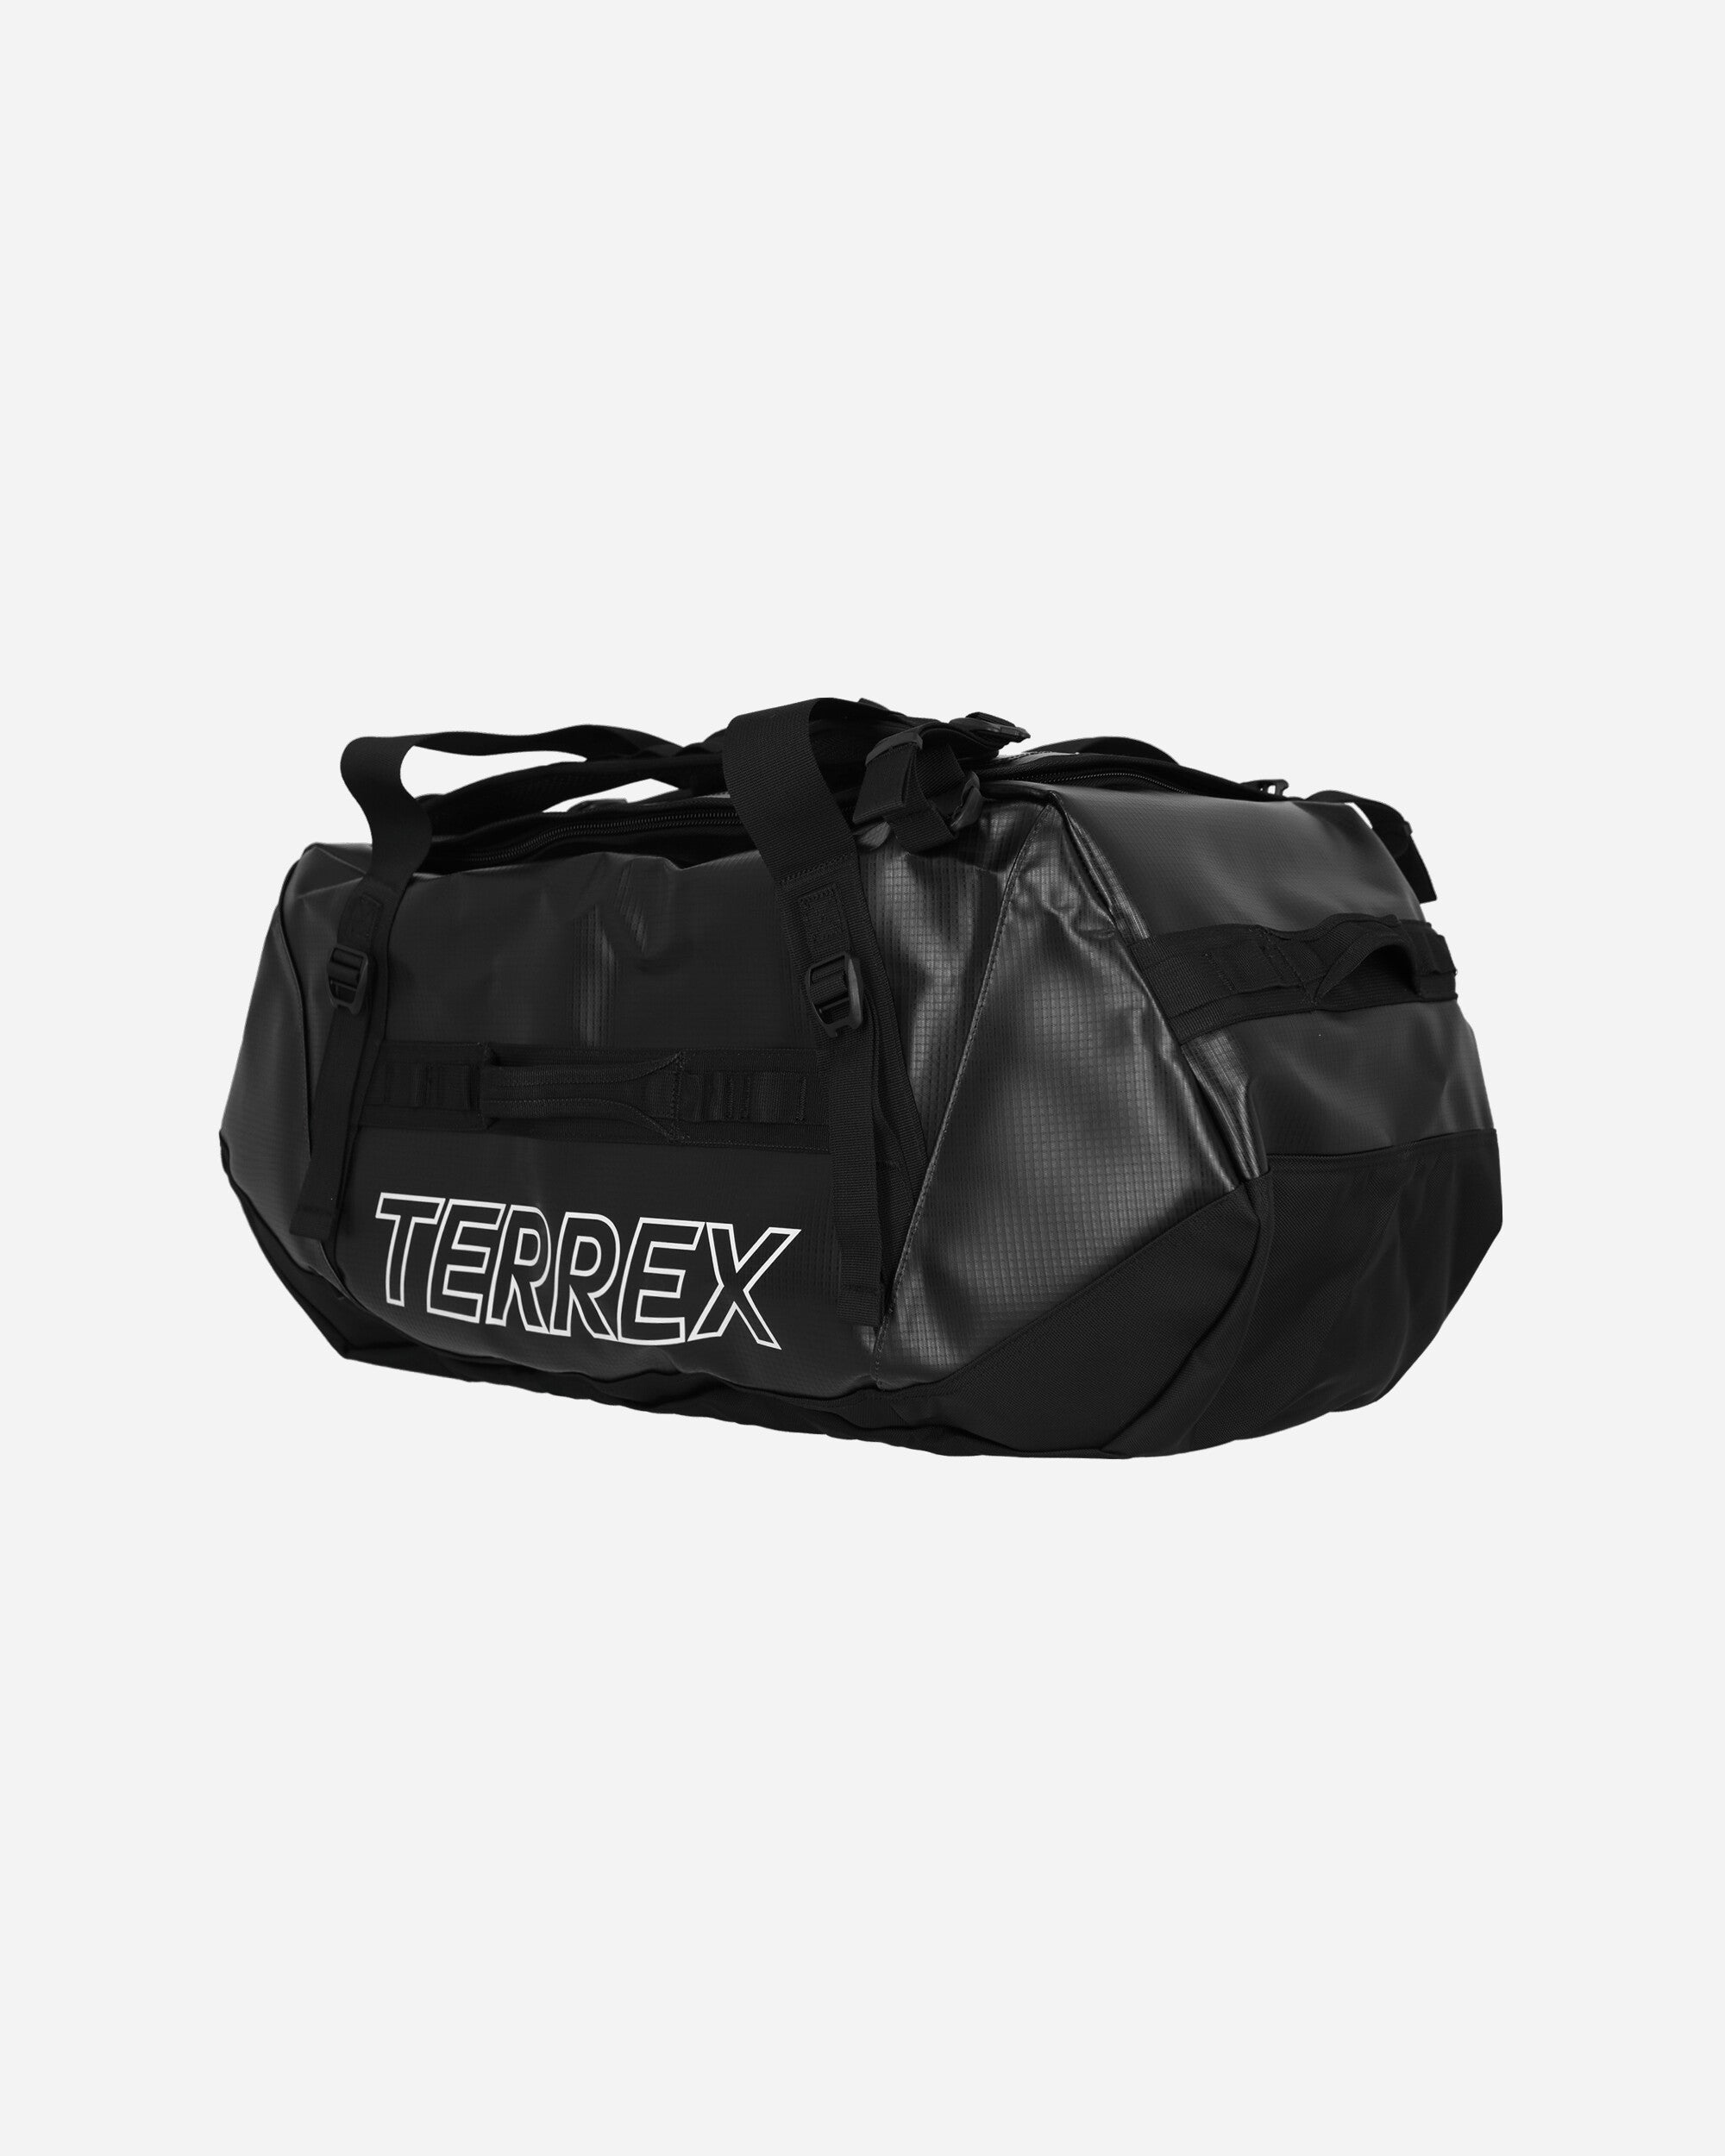 TERREX Expedition Duffel Bag Large Black